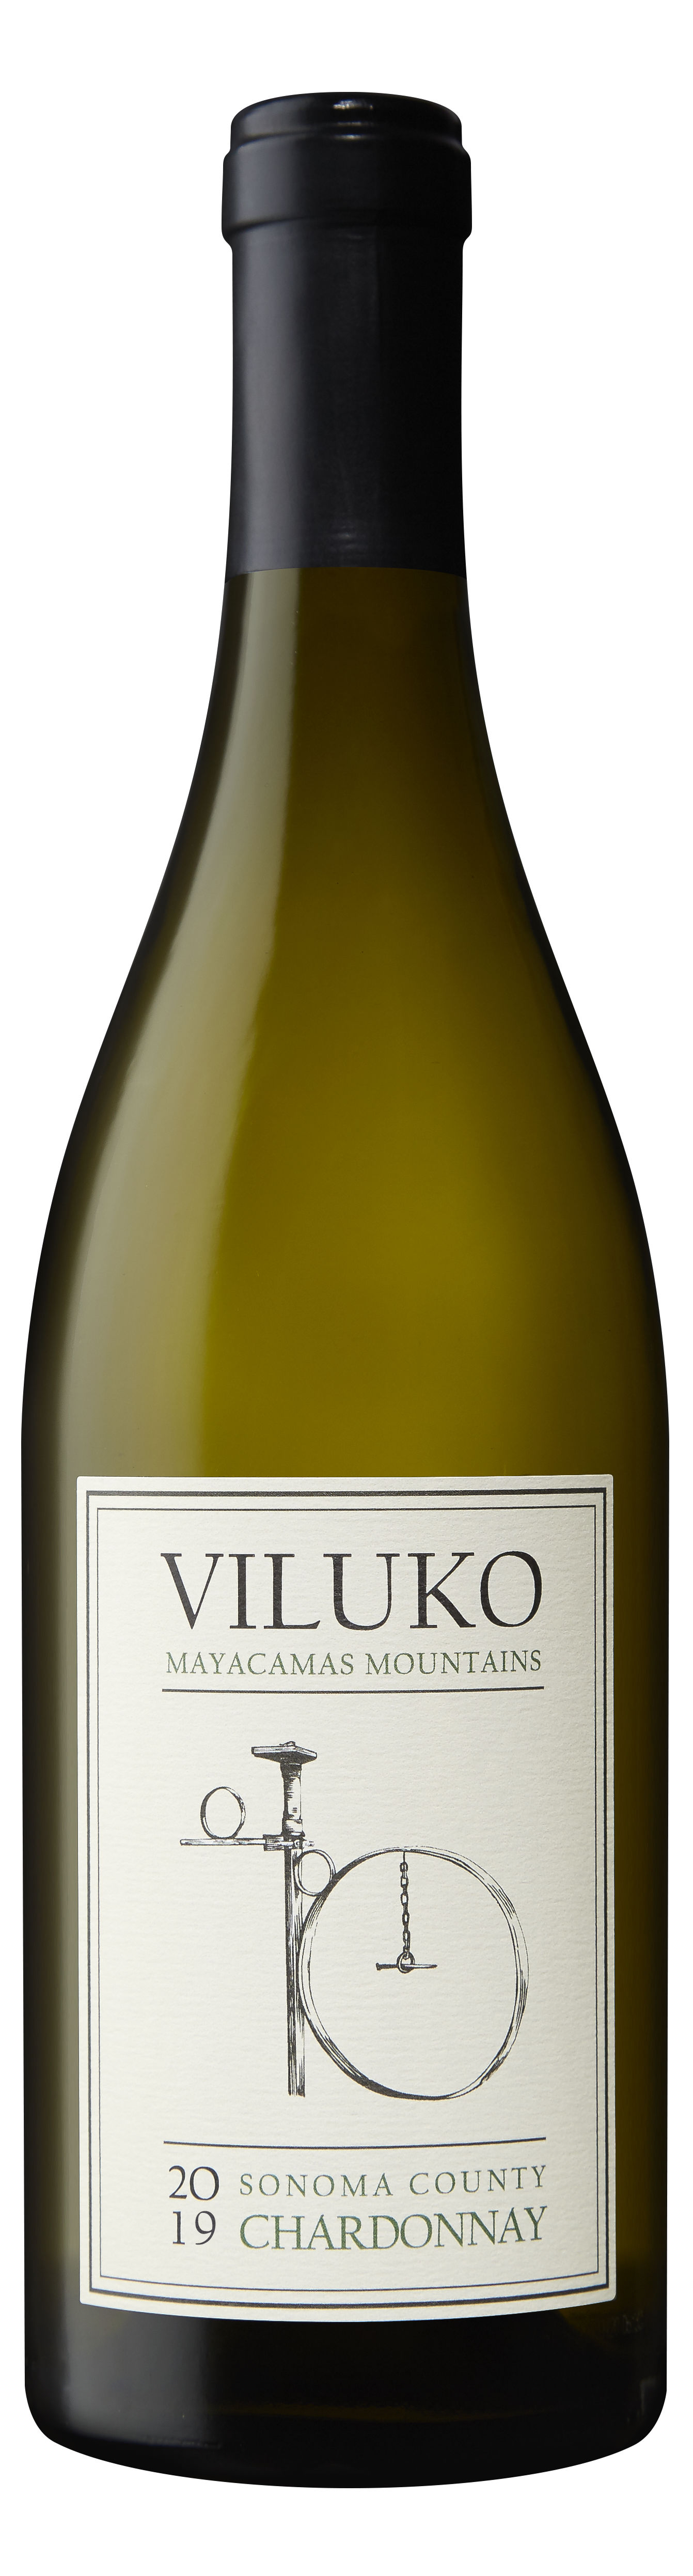 Product Image for 2019 Viluko Vineyards Chardonnay